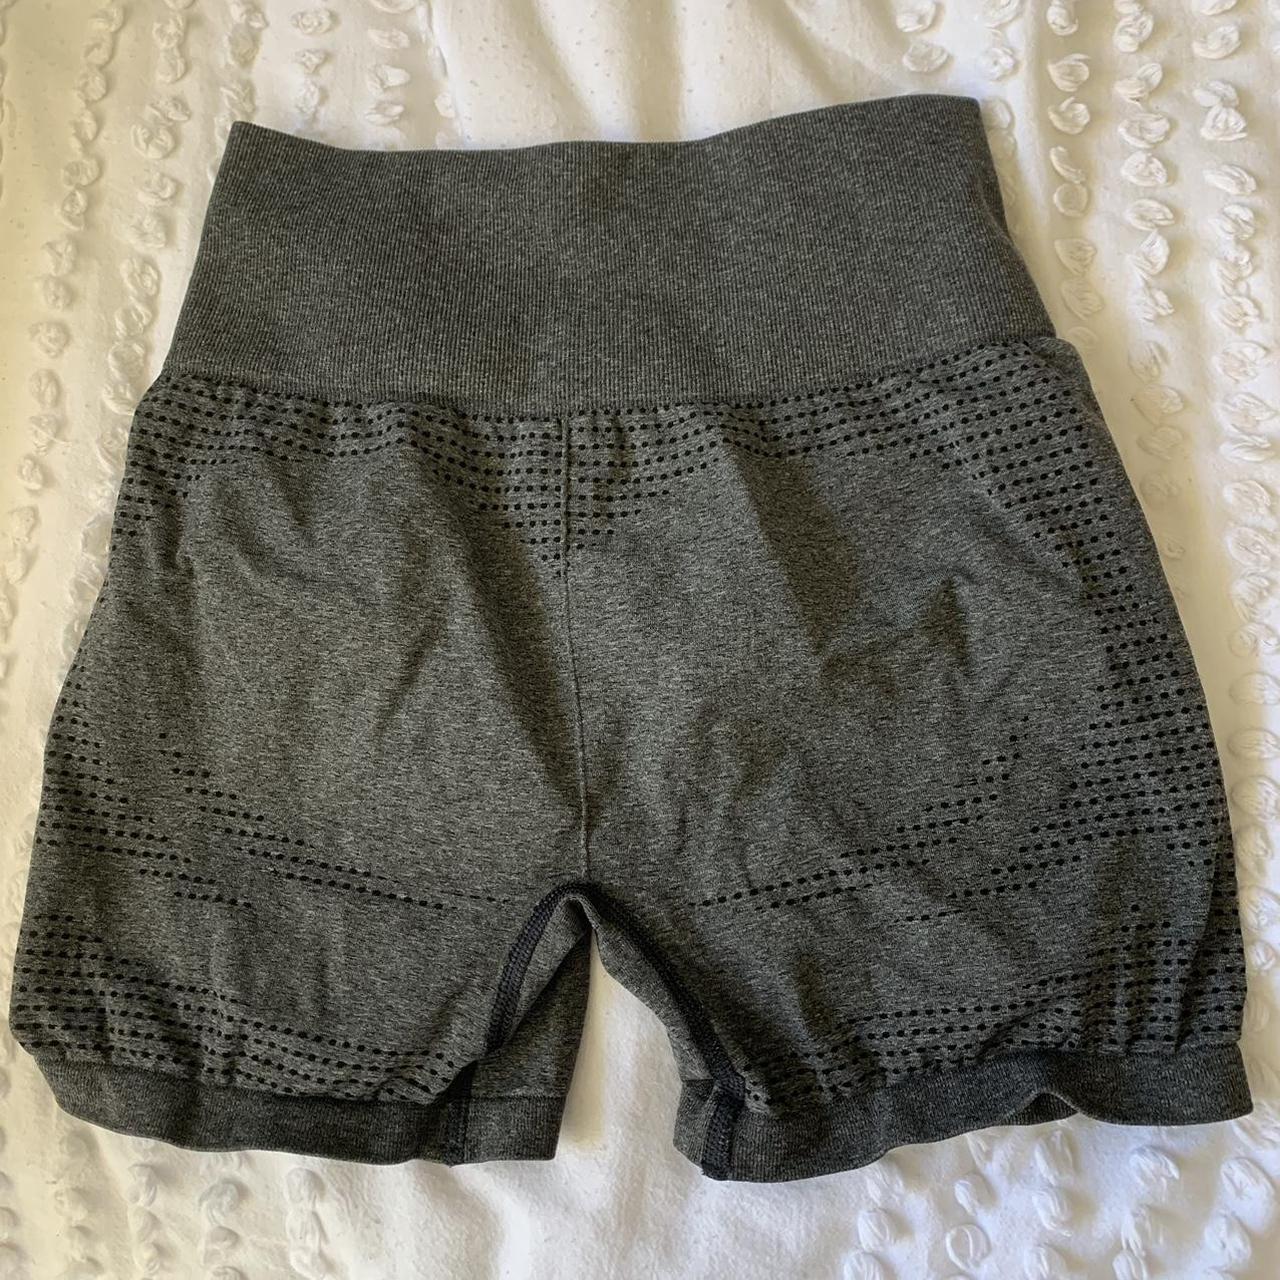 Gymshark Women's Black and Grey Shorts | Depop